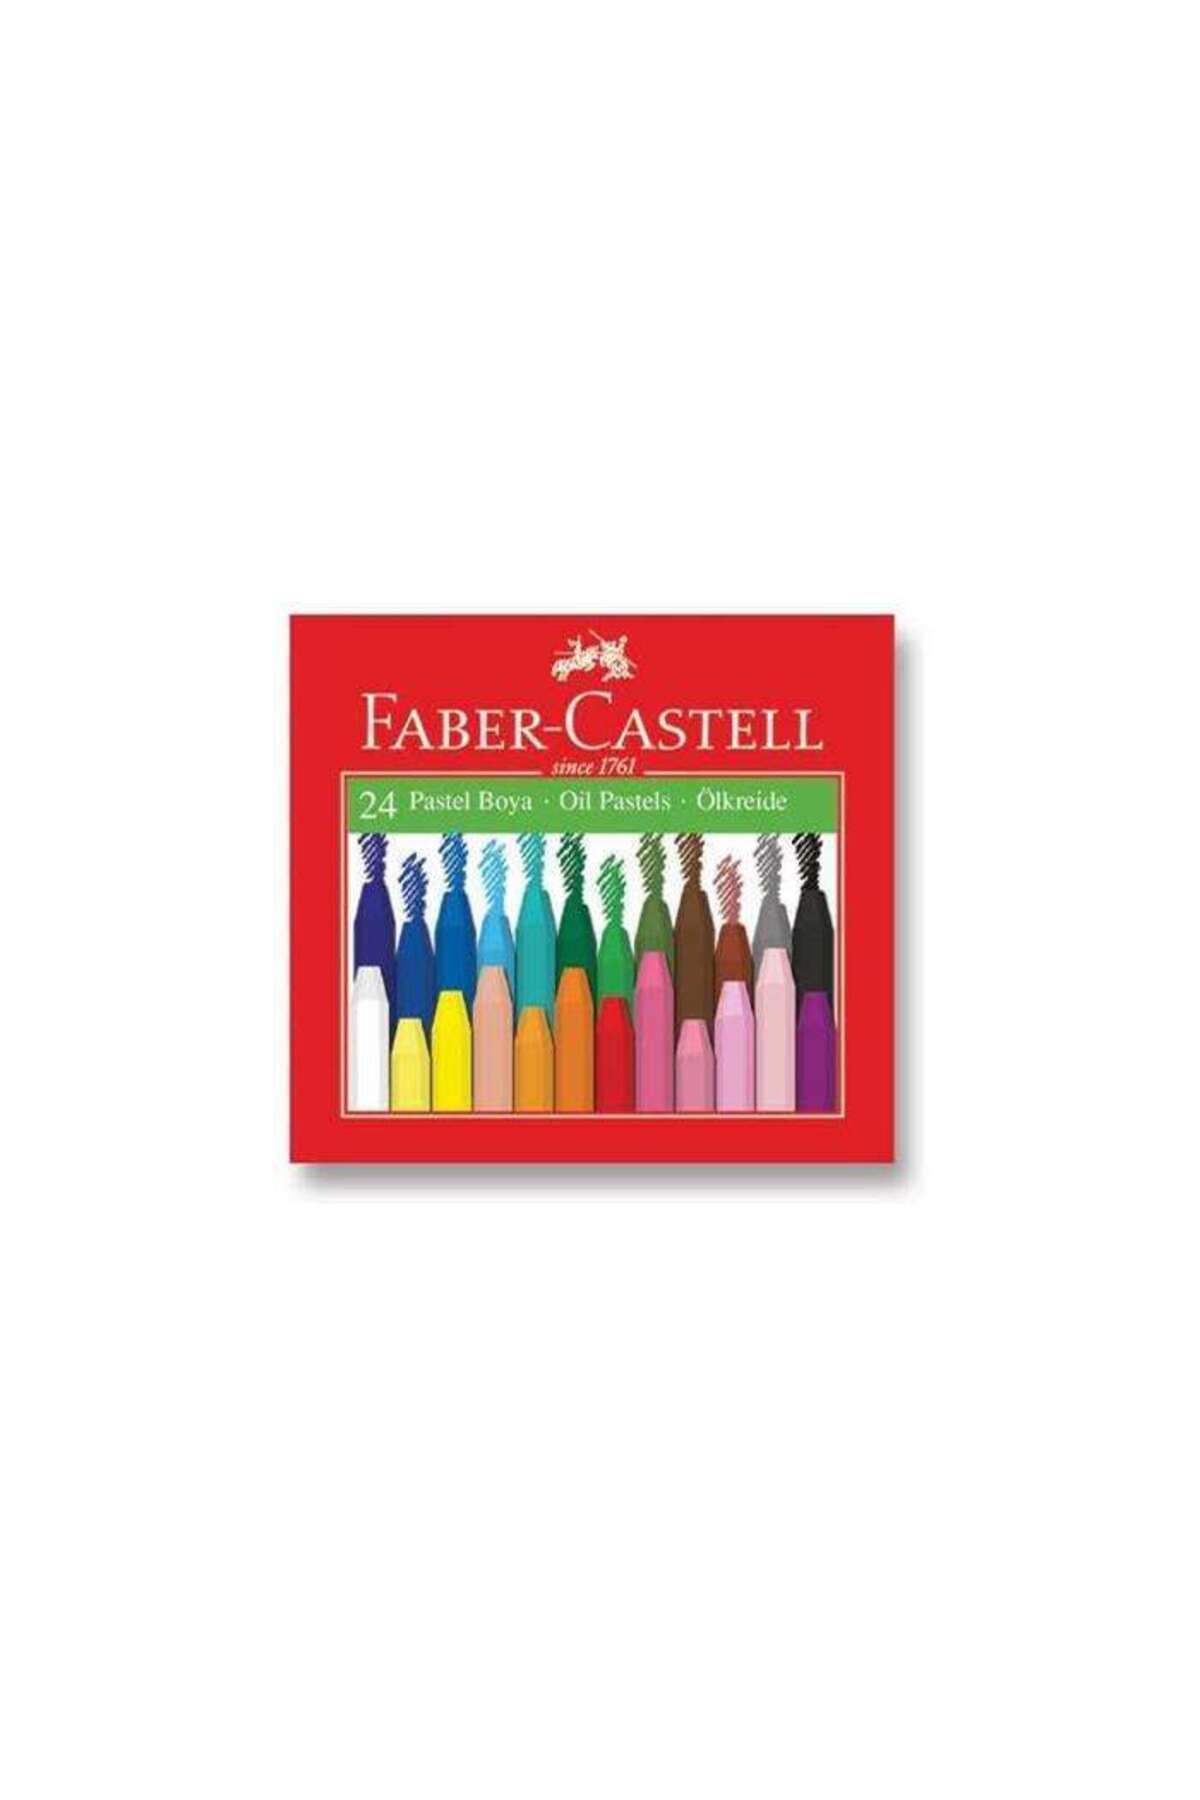 Faber Castell Pastel Boya Seti Redline 24 Renk